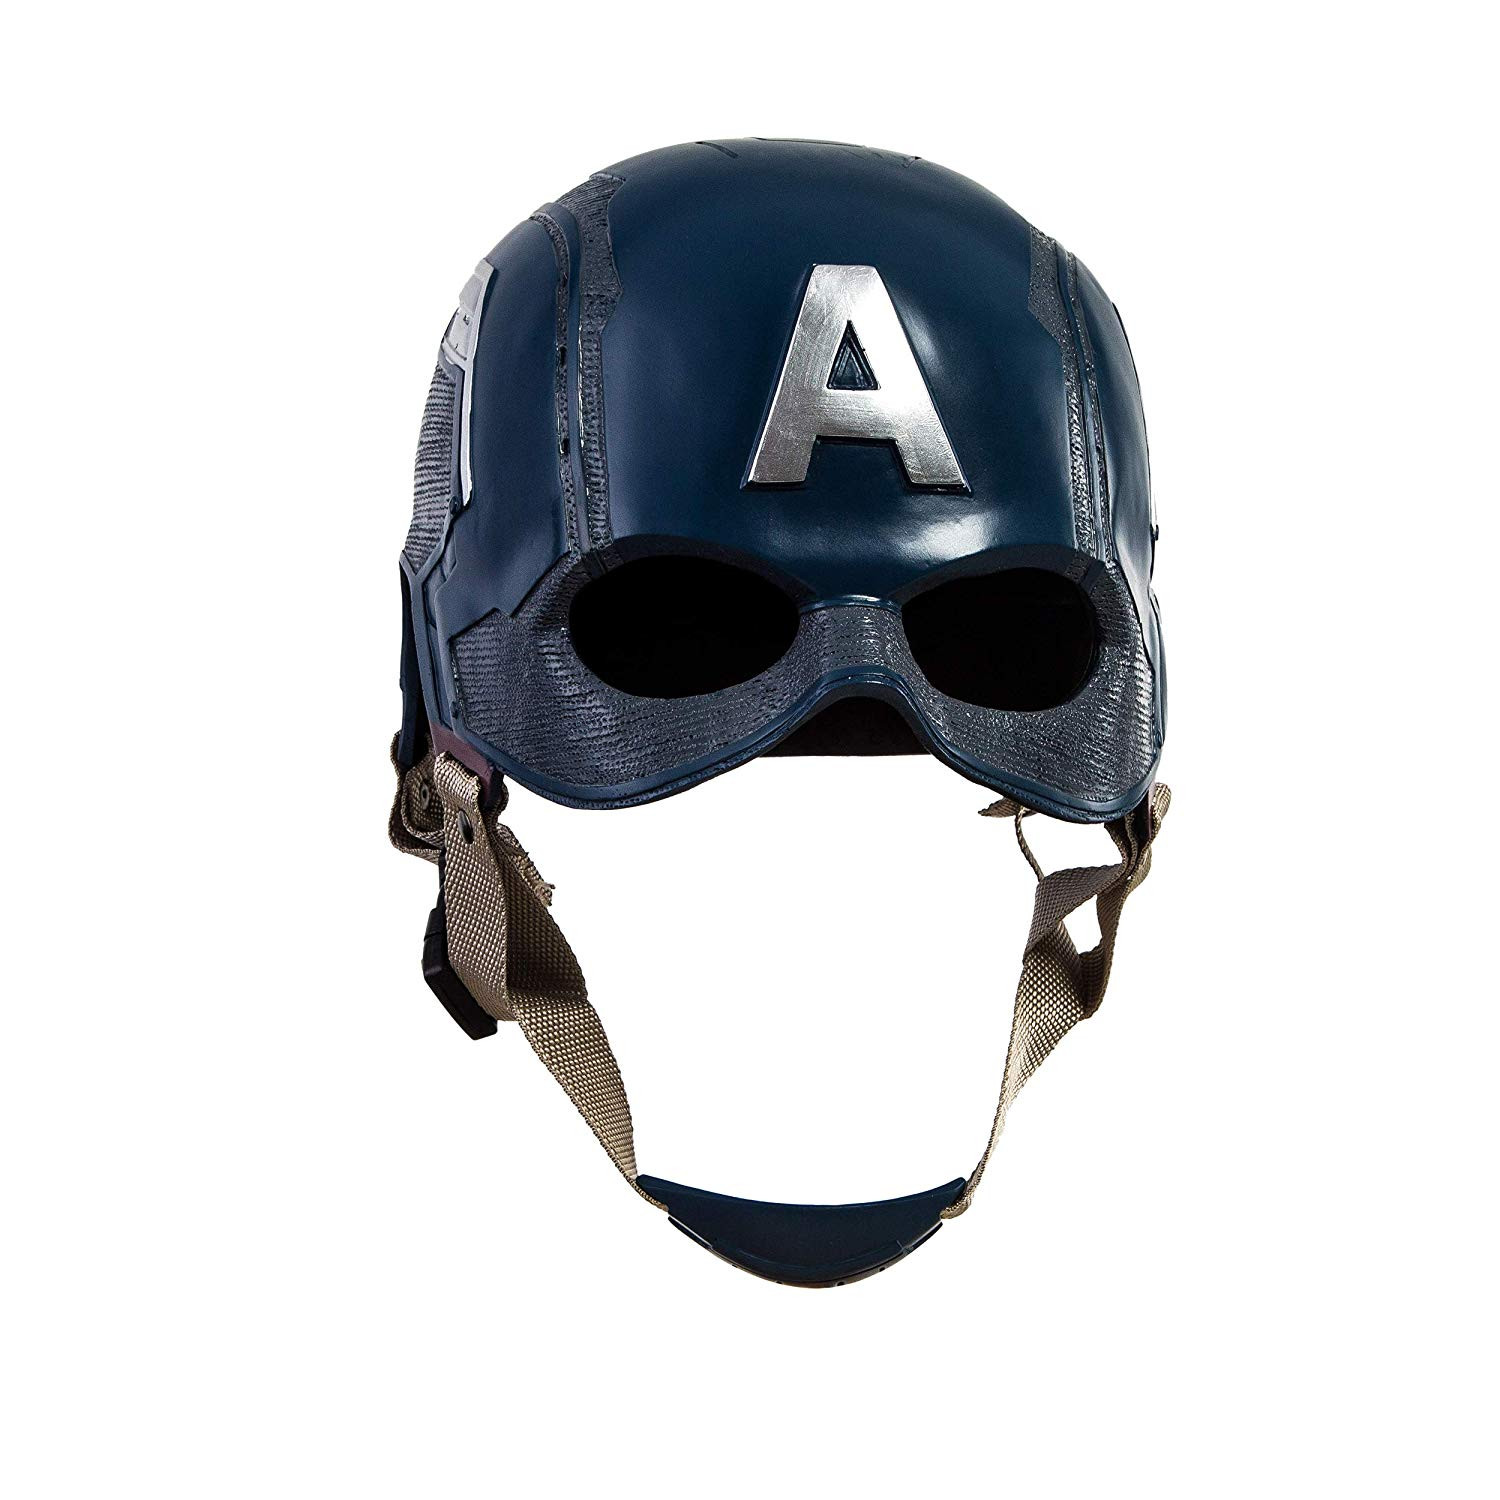 Captain America Mask DIY
 Avengers Endgame Captain America Costume DIY Cosplay guide